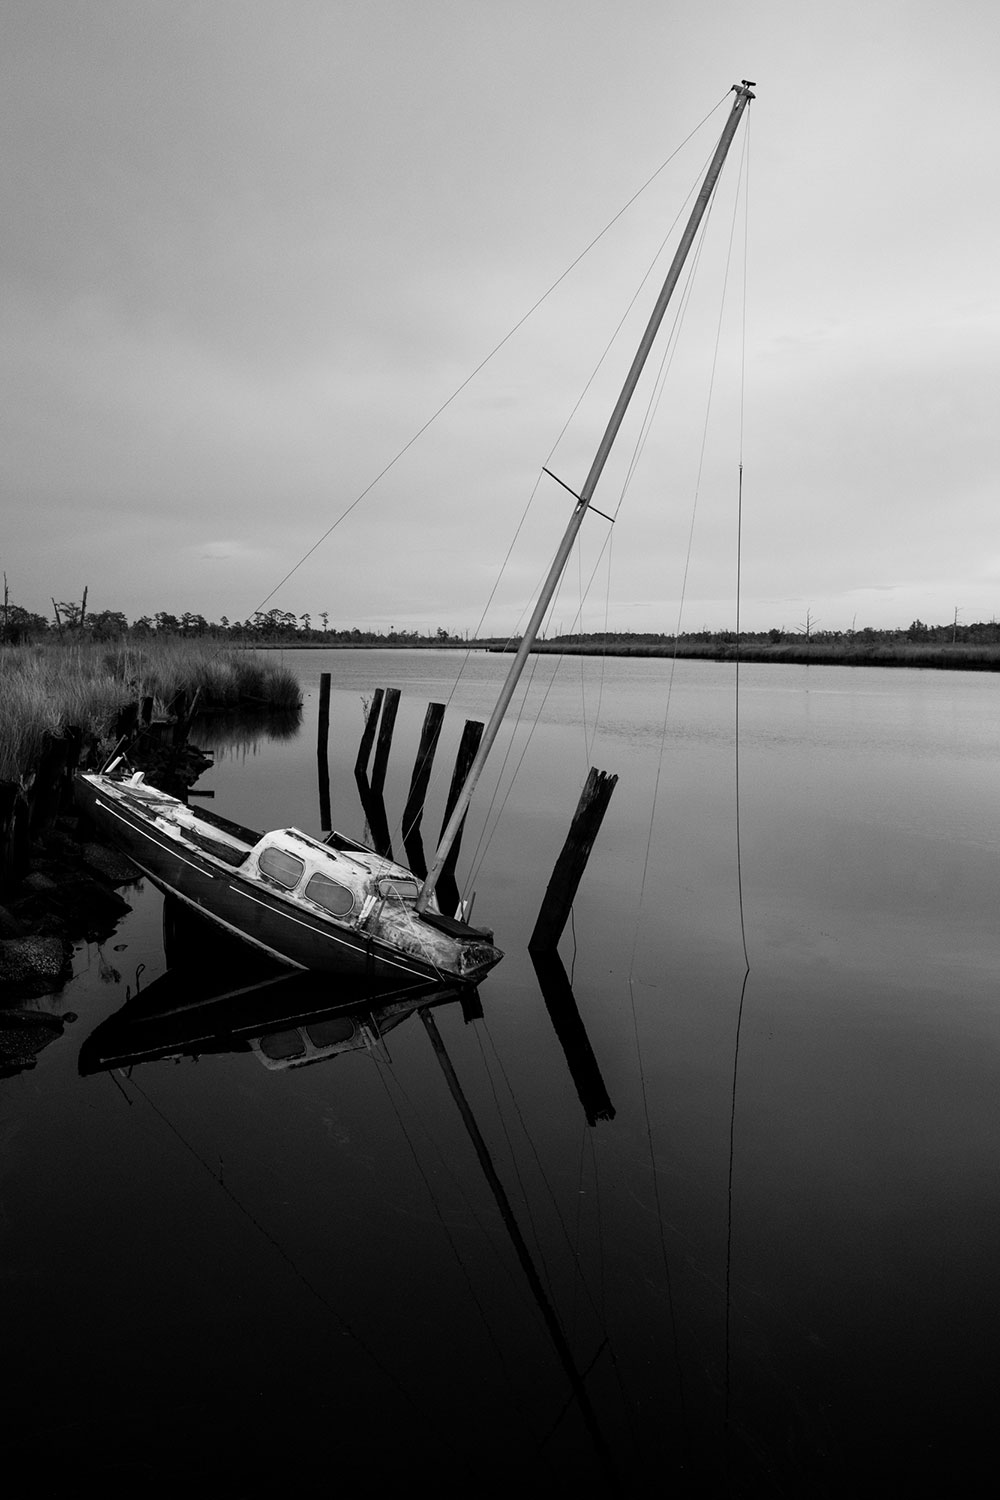 Black and White photo taken by Gunner Hughes of a half sunken sailboat